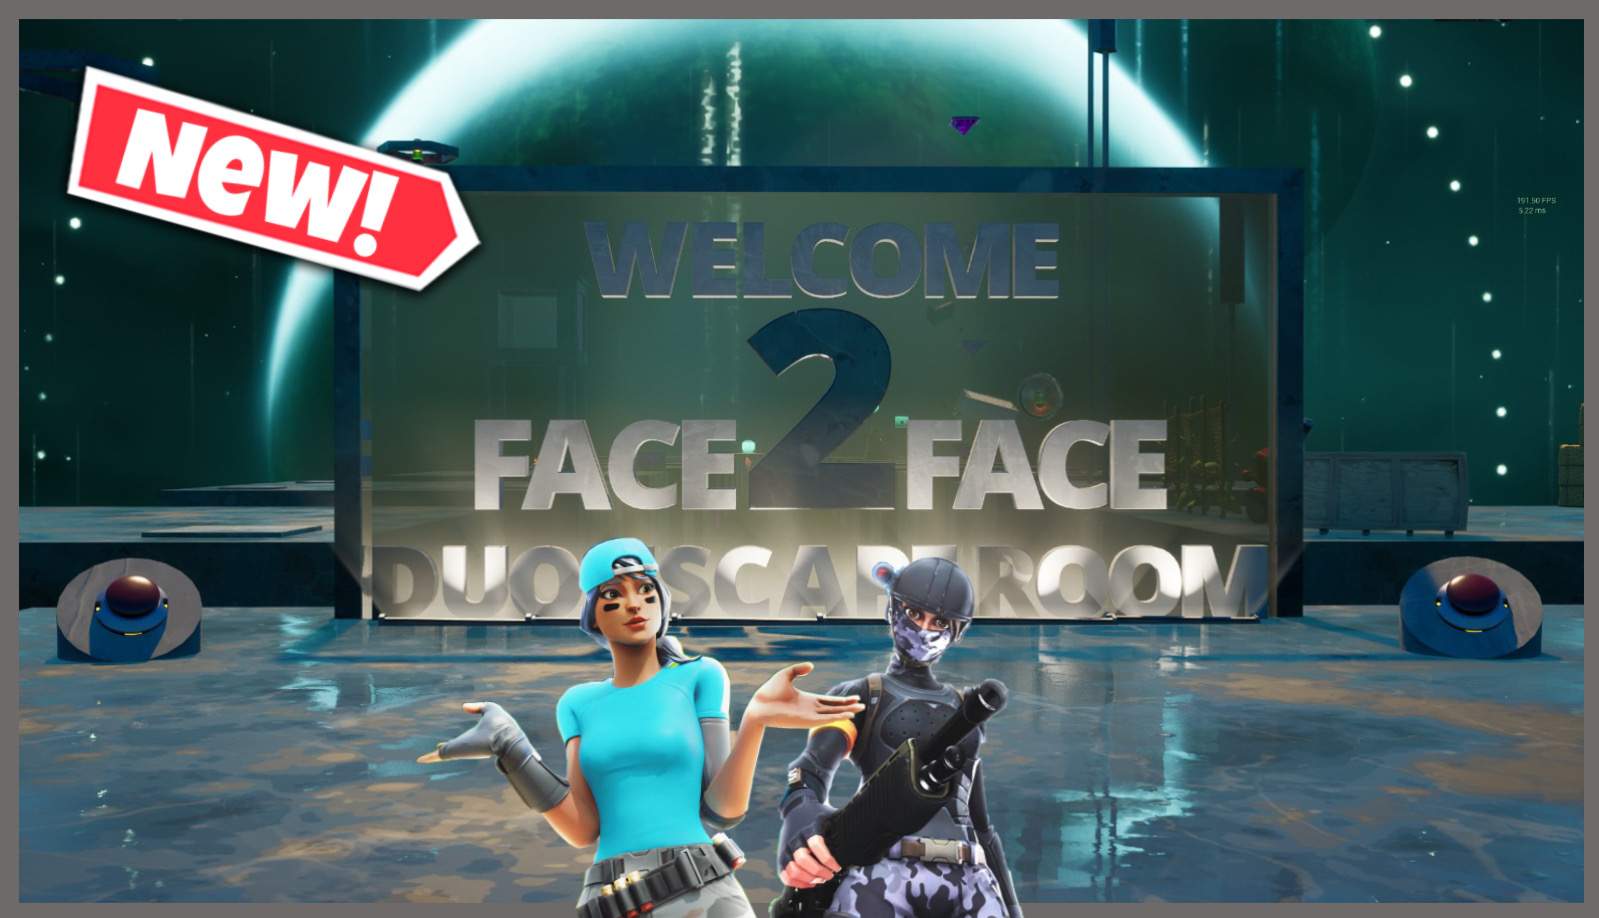 FACE 2 FACE | Duo Escape Room image 3